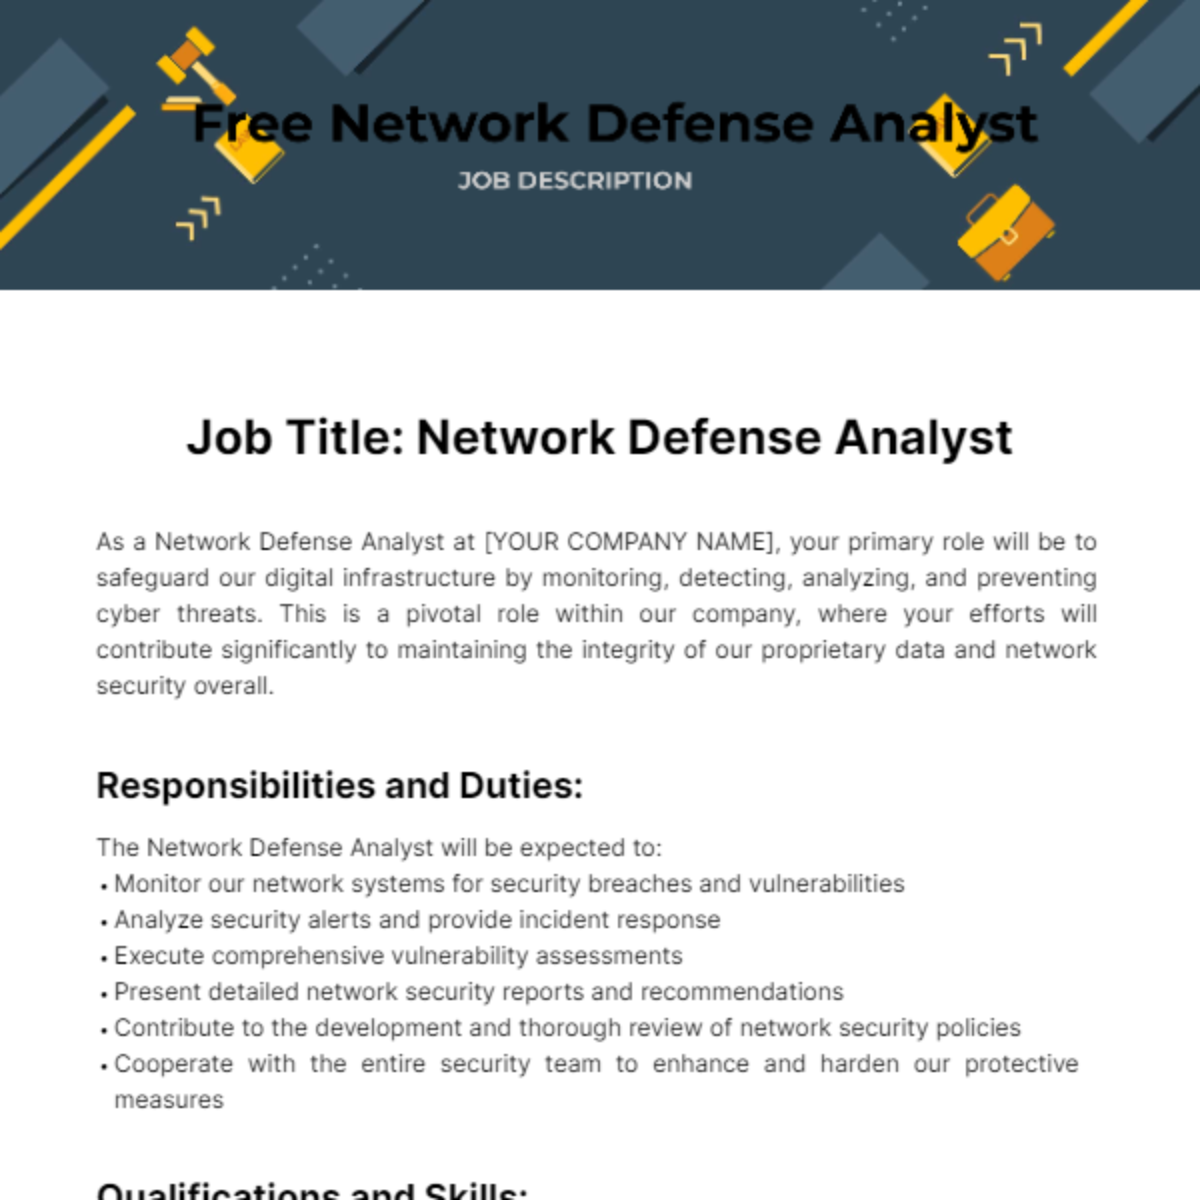 Free Network Defense Analyst Job Description Template